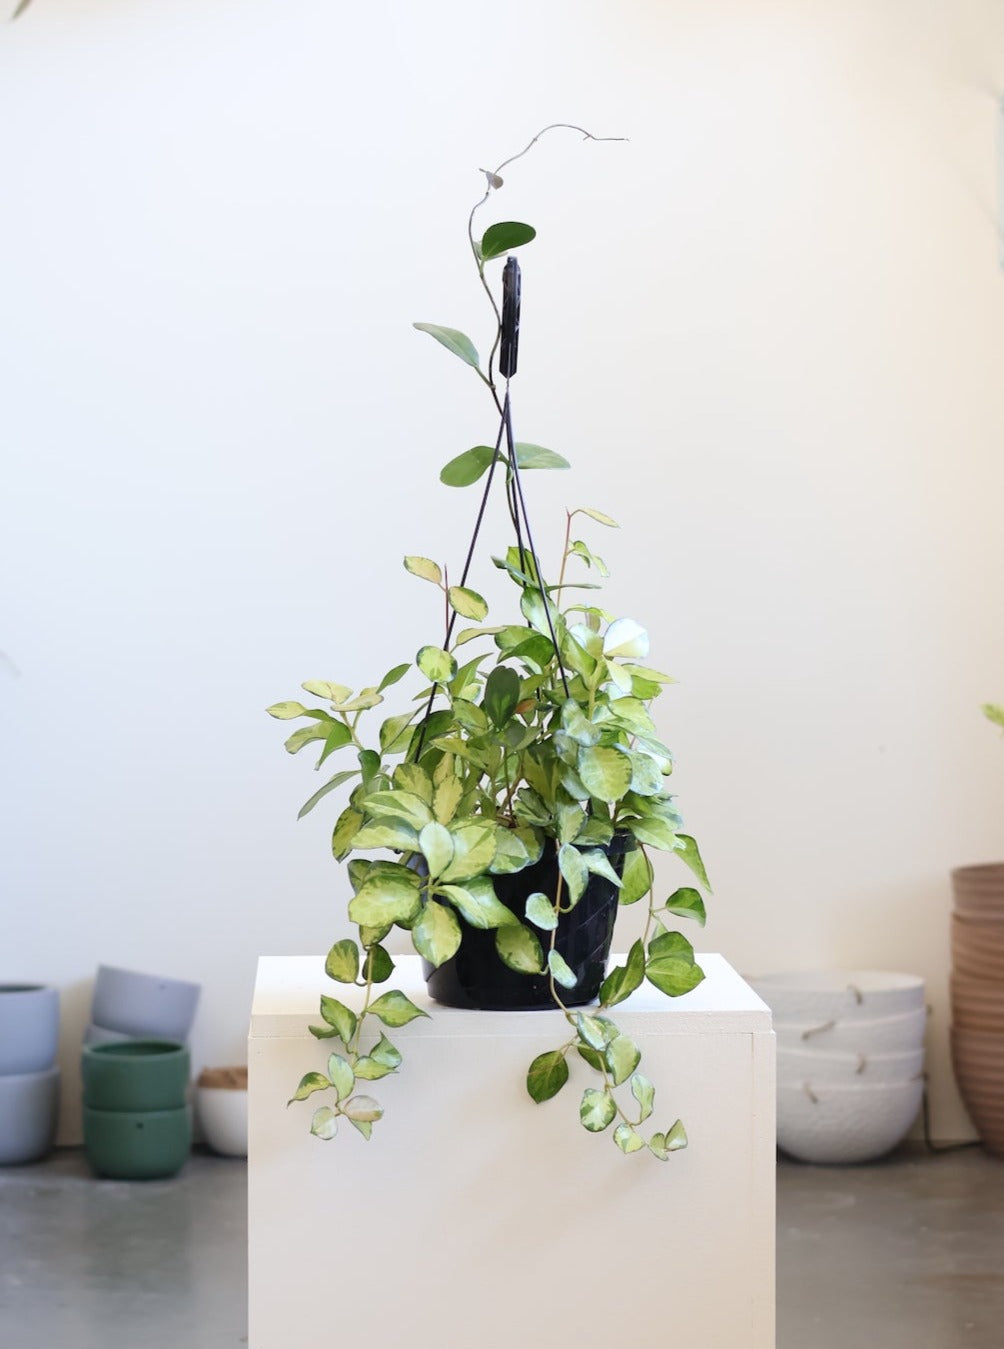 Hoya Australis Tricolor aka Wax Plant (4 Inch Nursery Pot and Up)